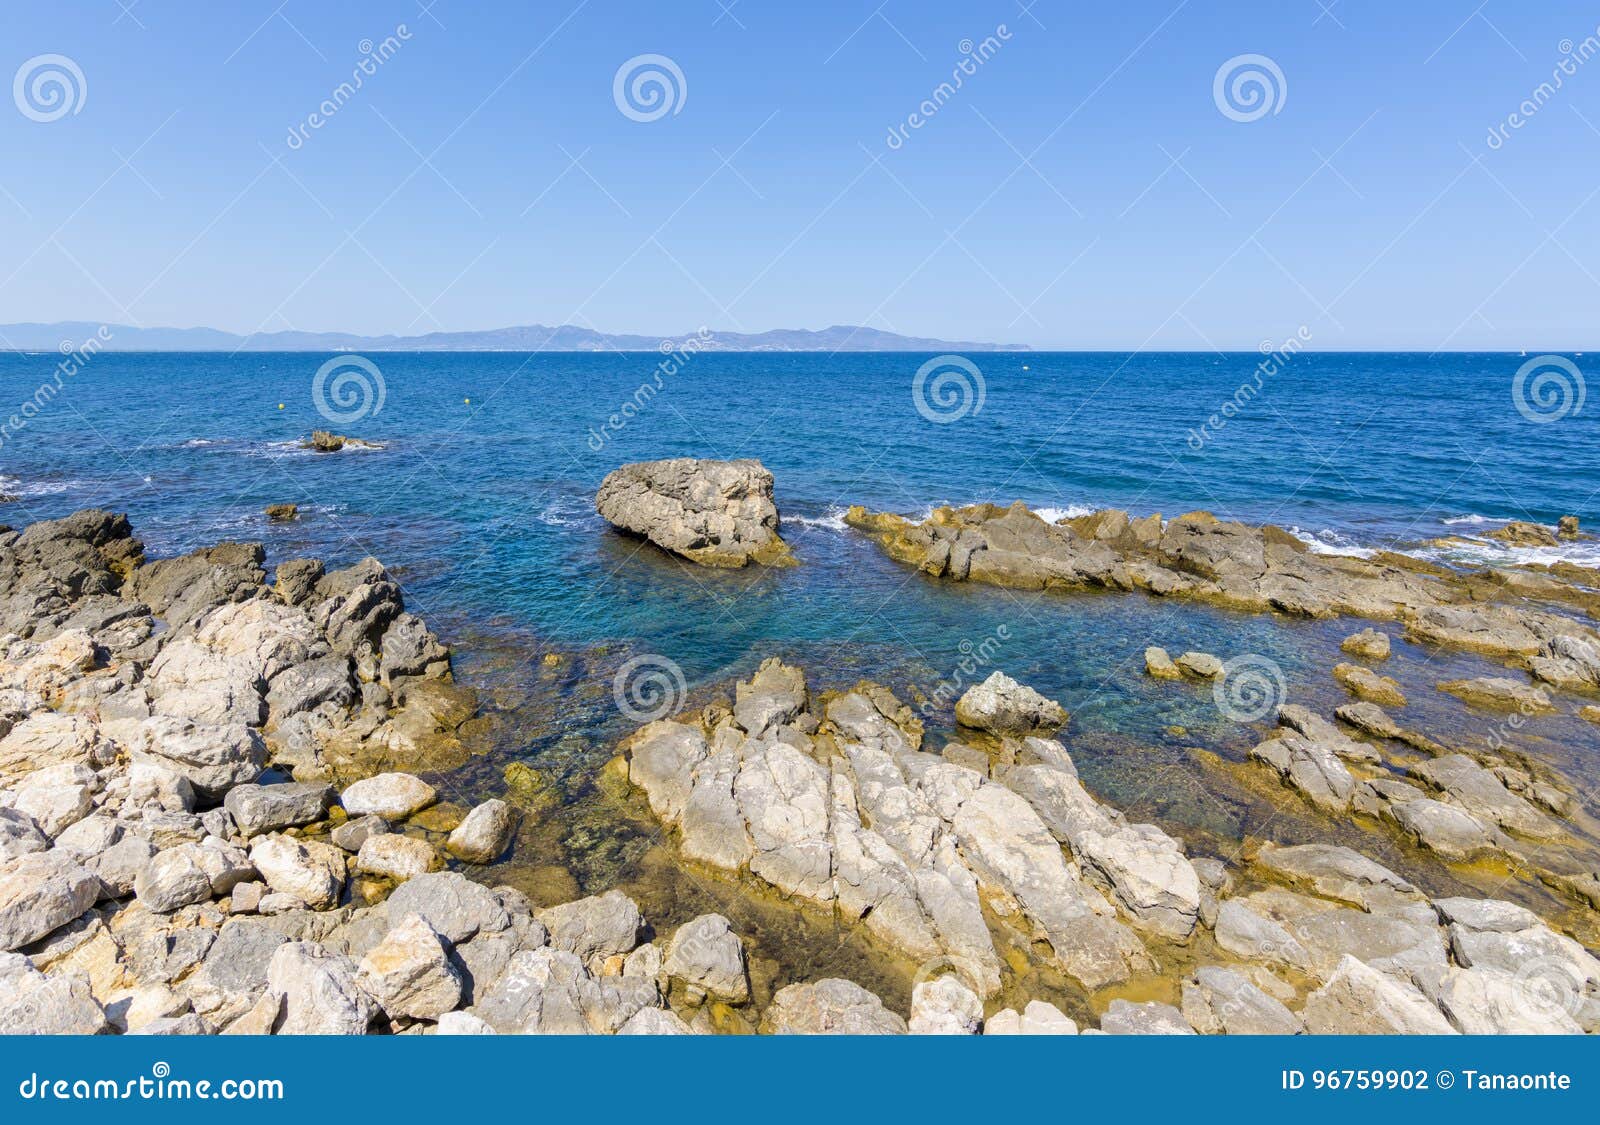 rocky mediterranean coast of l`escala village in costa brava, spain